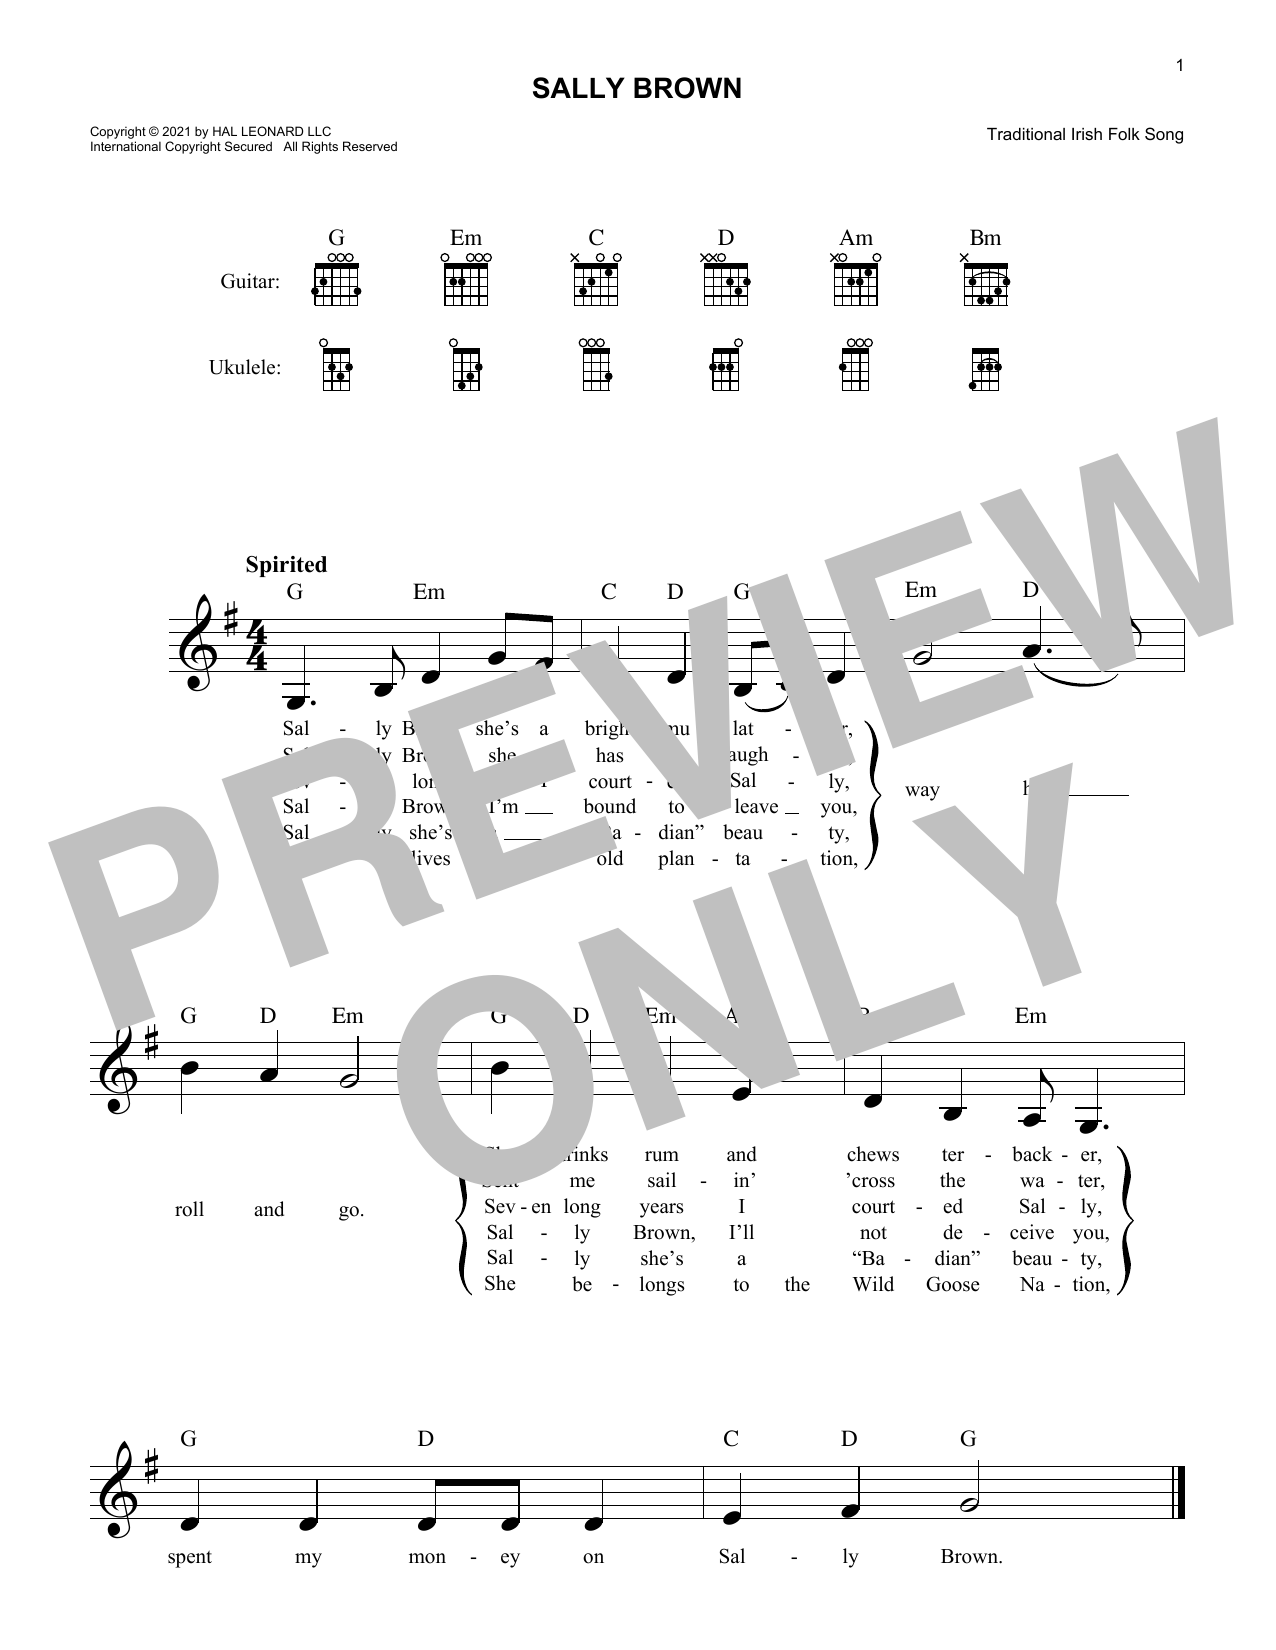 Traditional Irish Folk Song Sally Brown Sheet Music Notes & Chords for Lead Sheet / Fake Book - Download or Print PDF